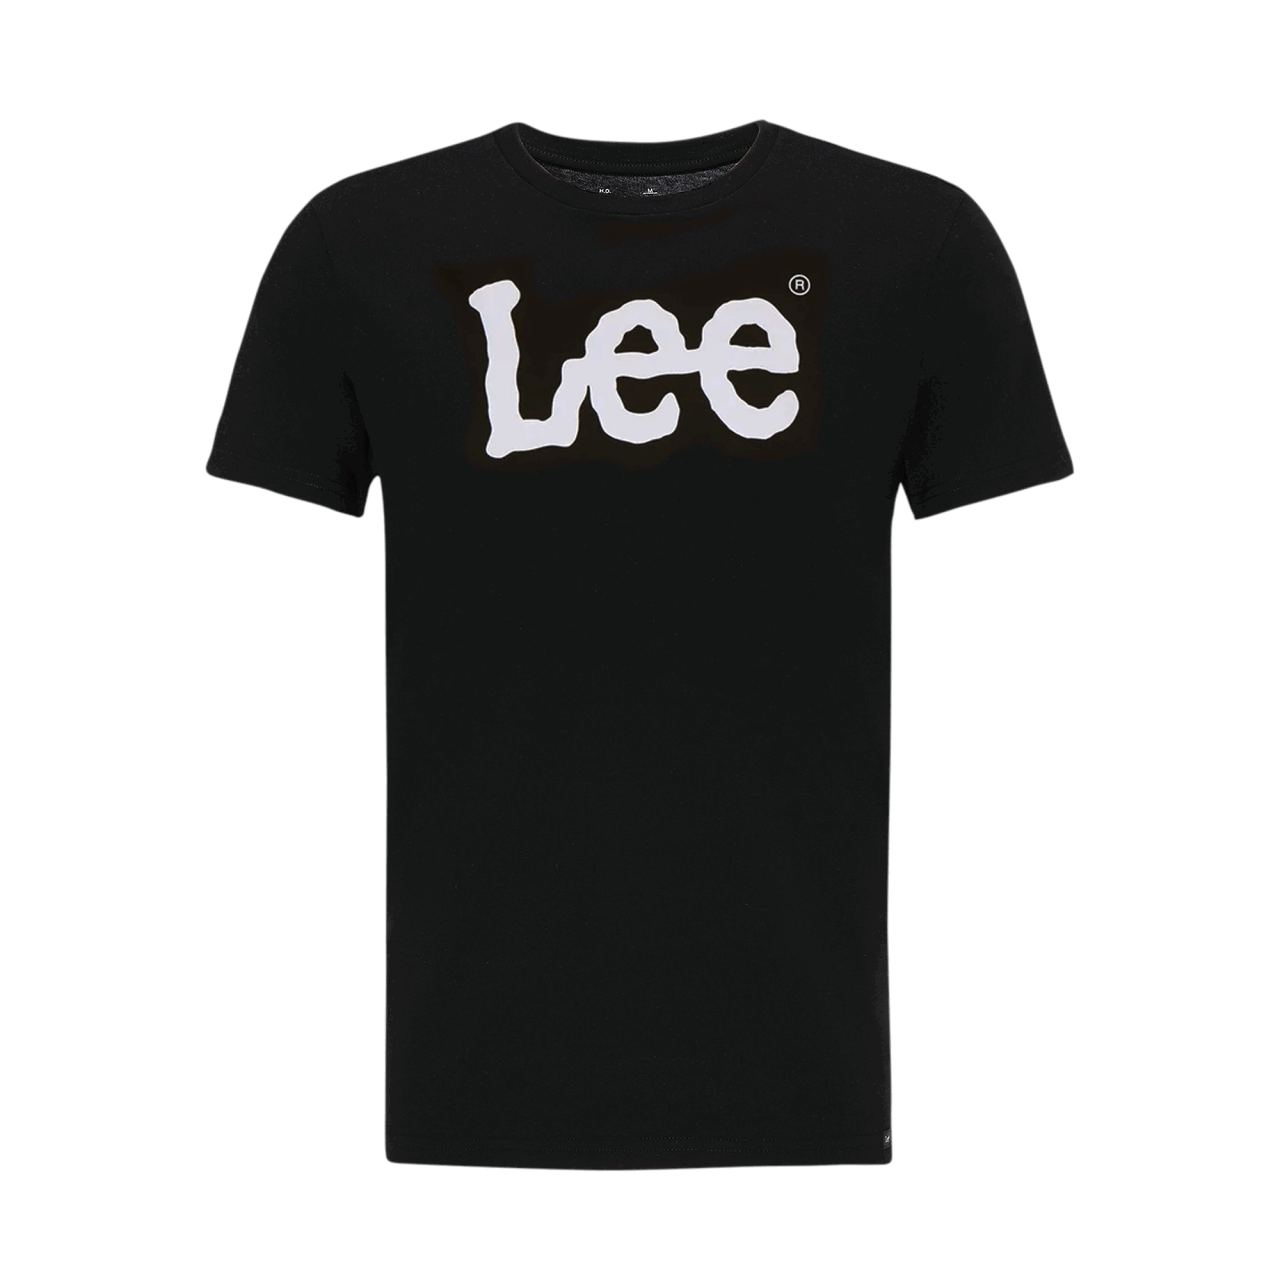 LEE T-Shirt - Logo Tee Black